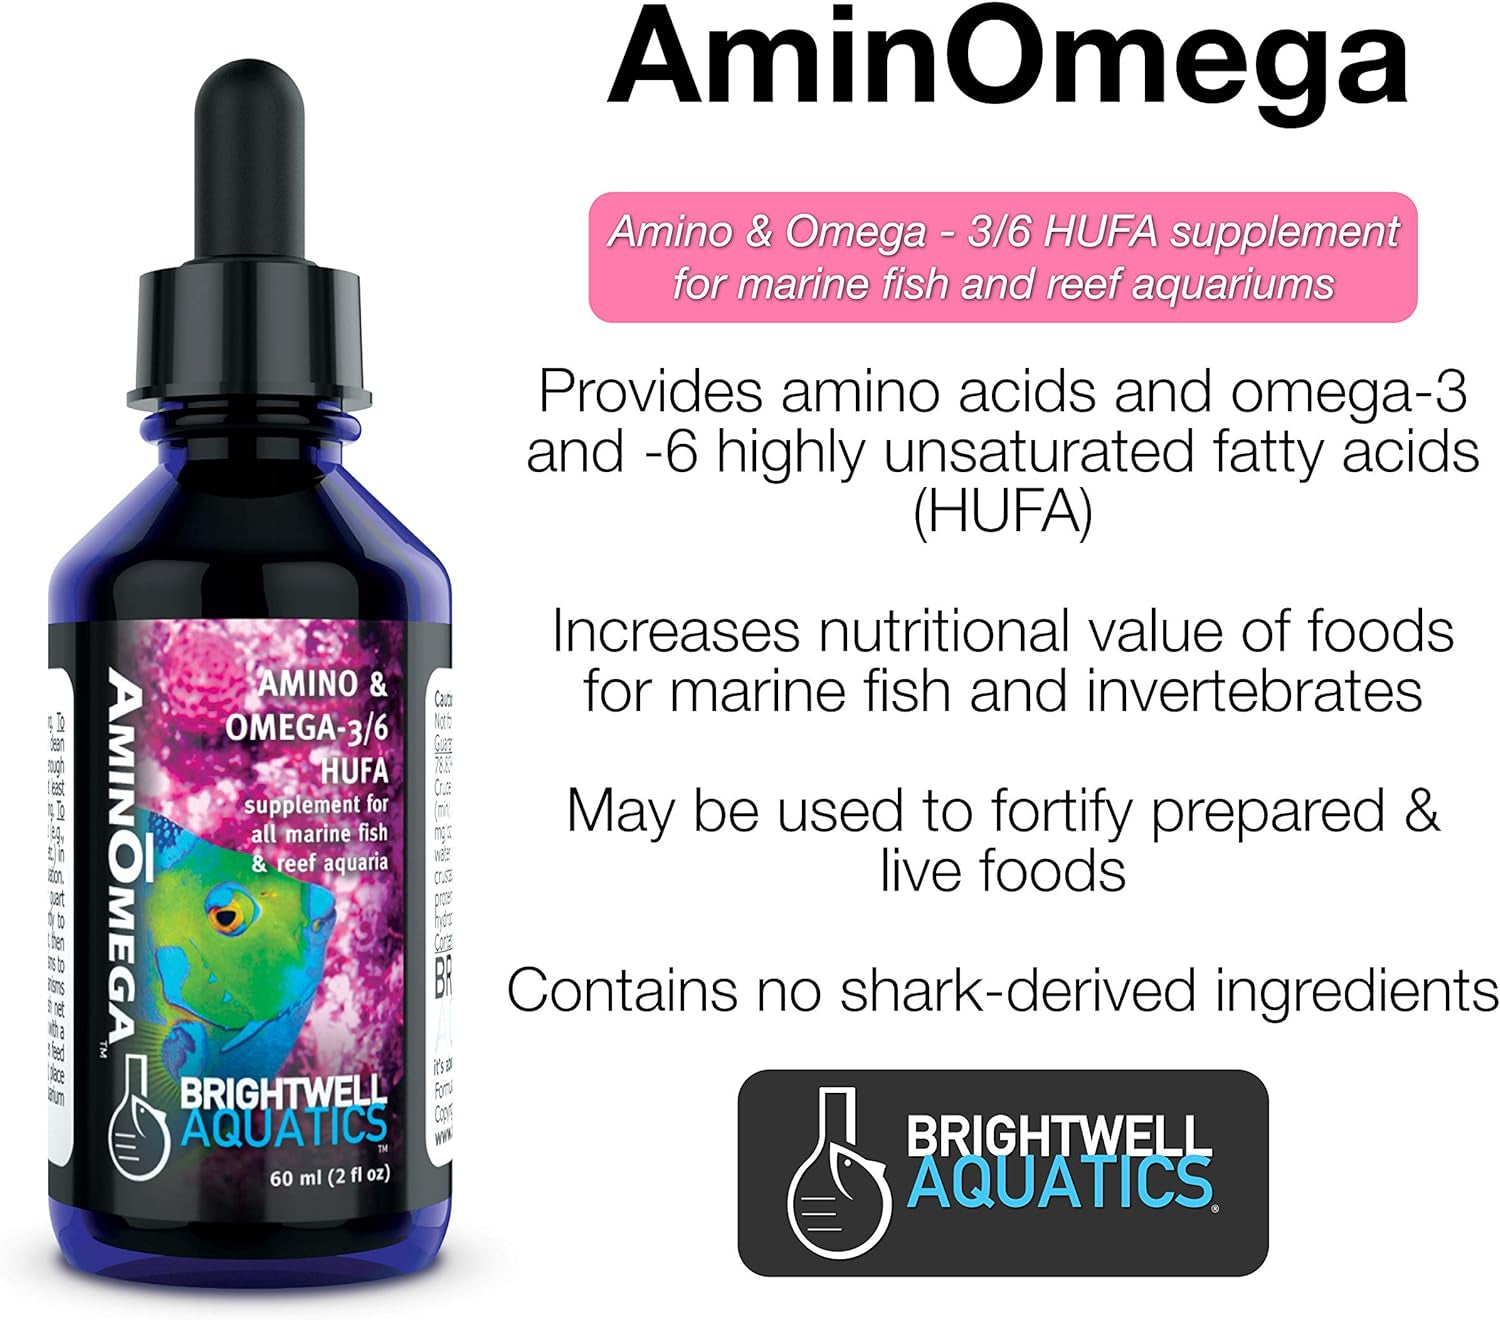 Aminomega - Amino & Omega - 3/6 HUFA Supplement for All Marine Fish & Reef Aquariums